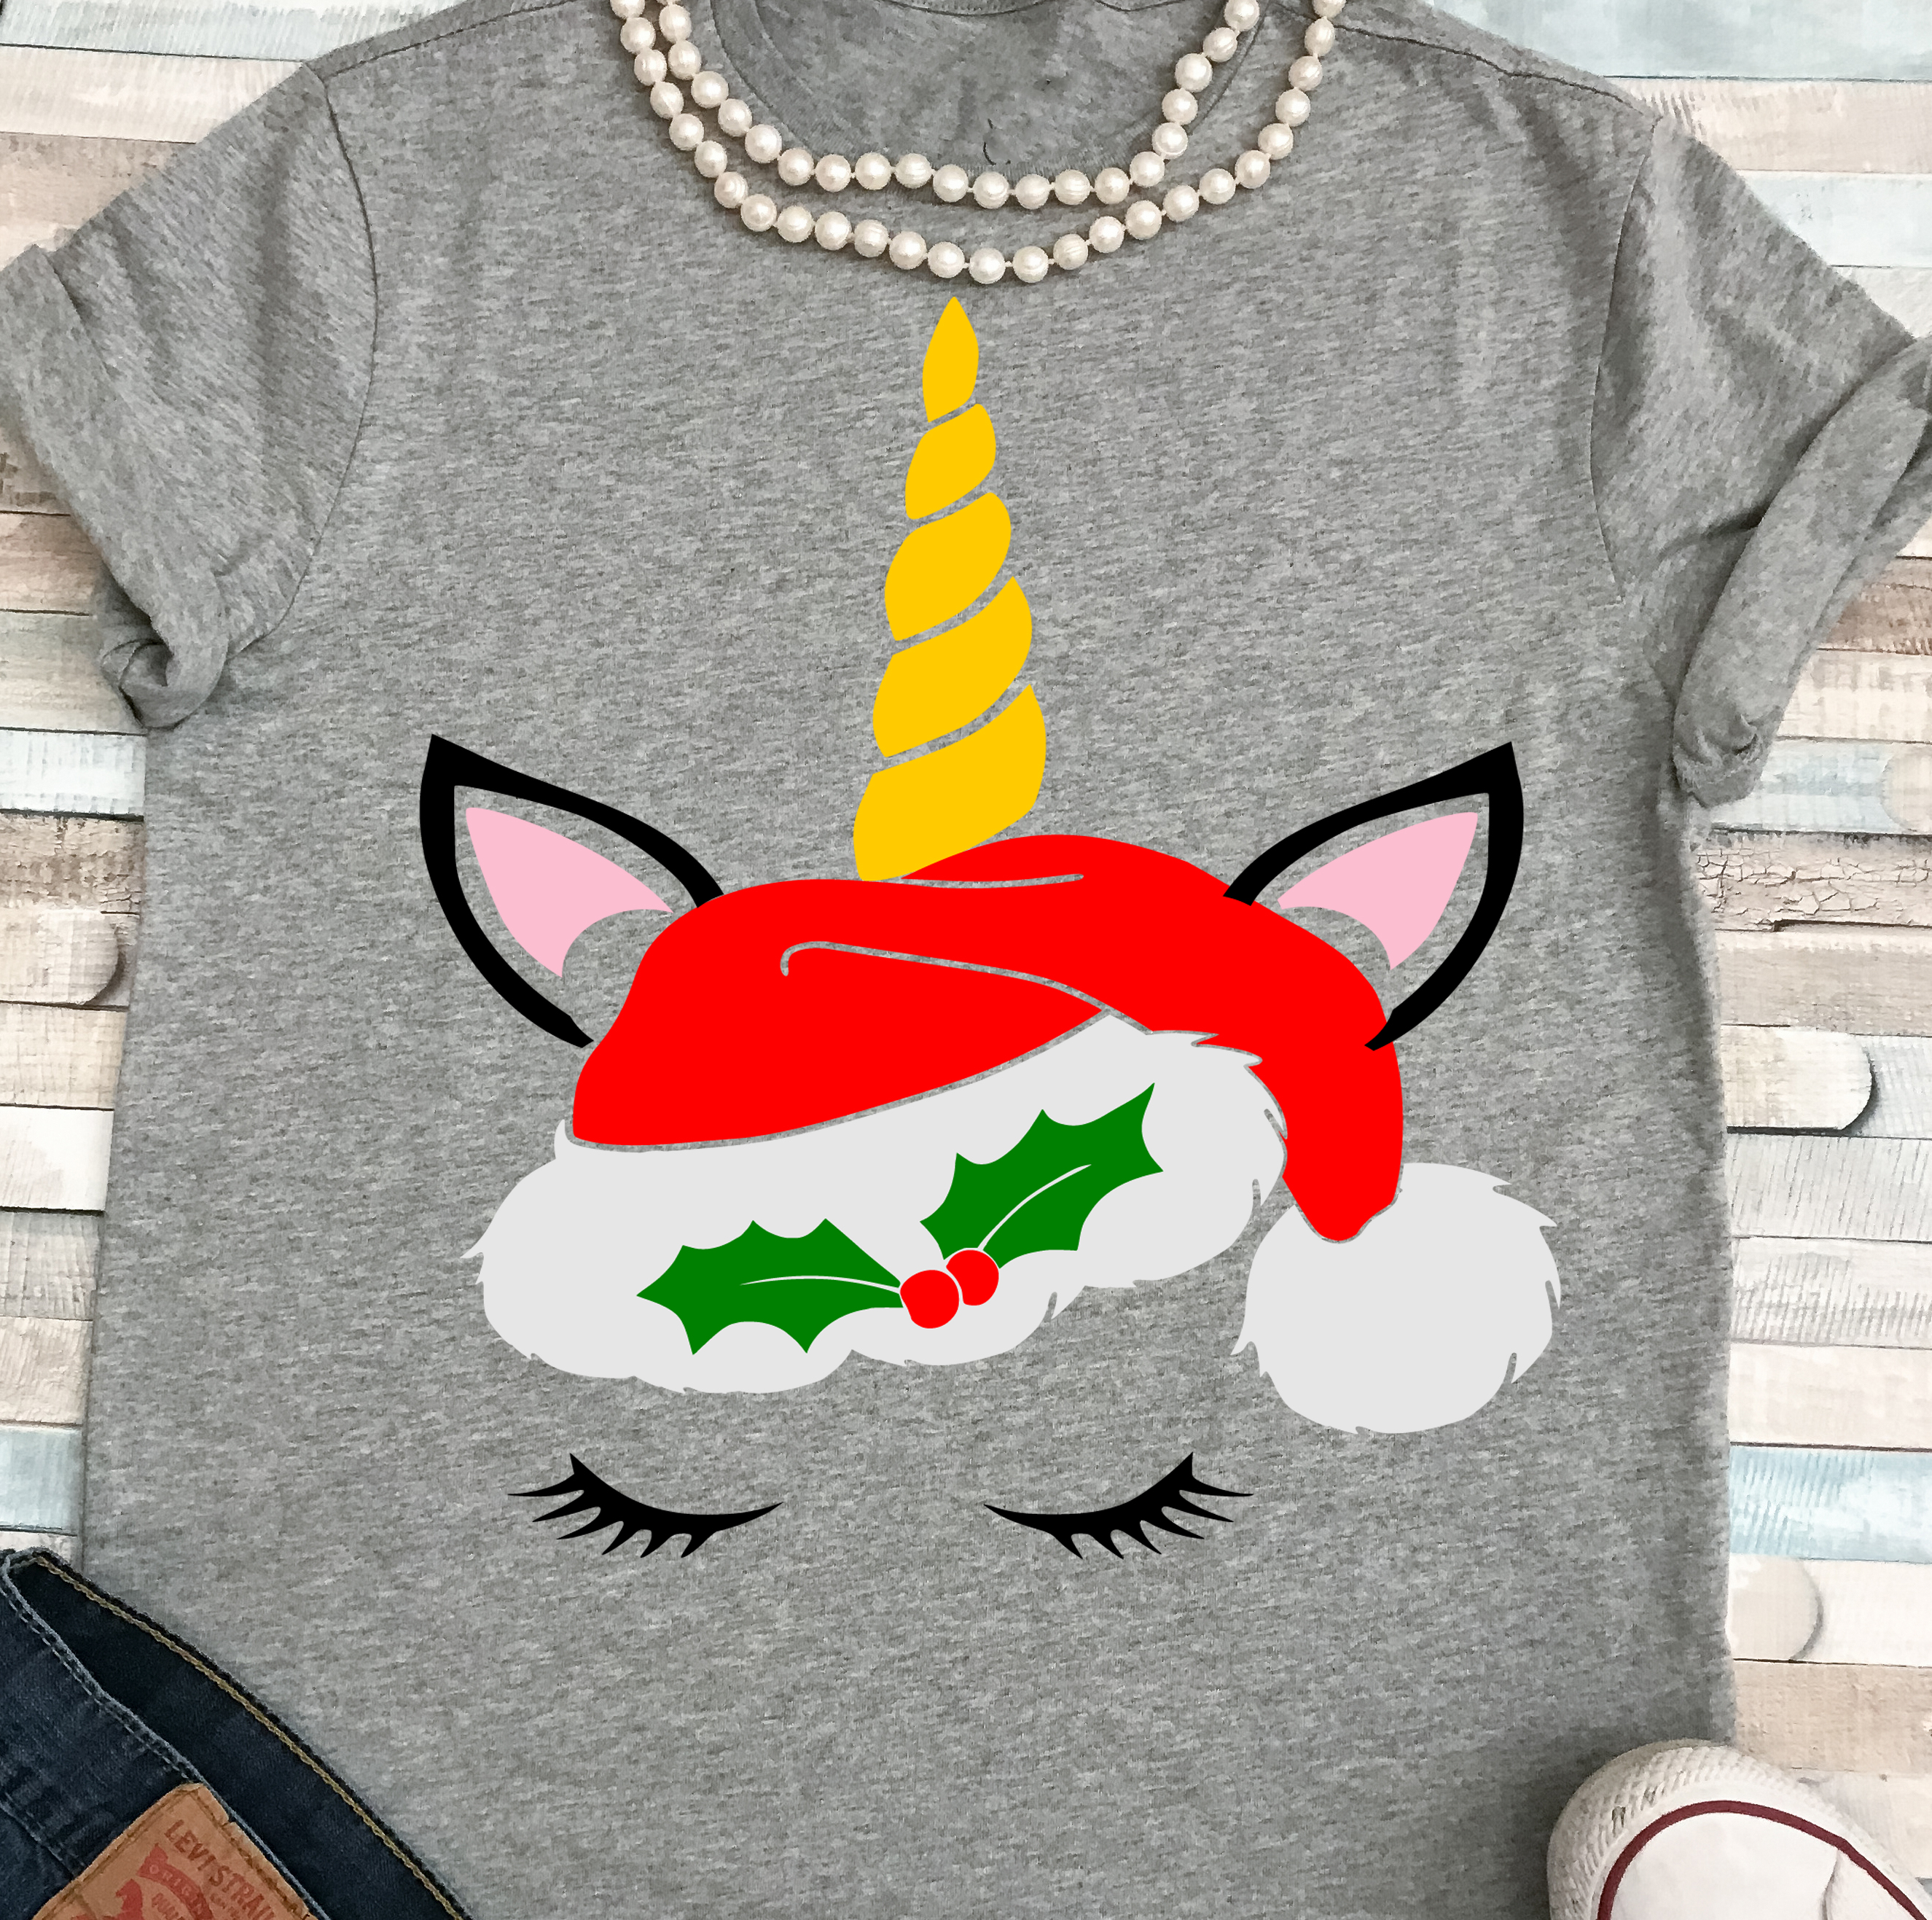 Download Christmas Unicorn SVG - Santa hat eyelashes Design cut file